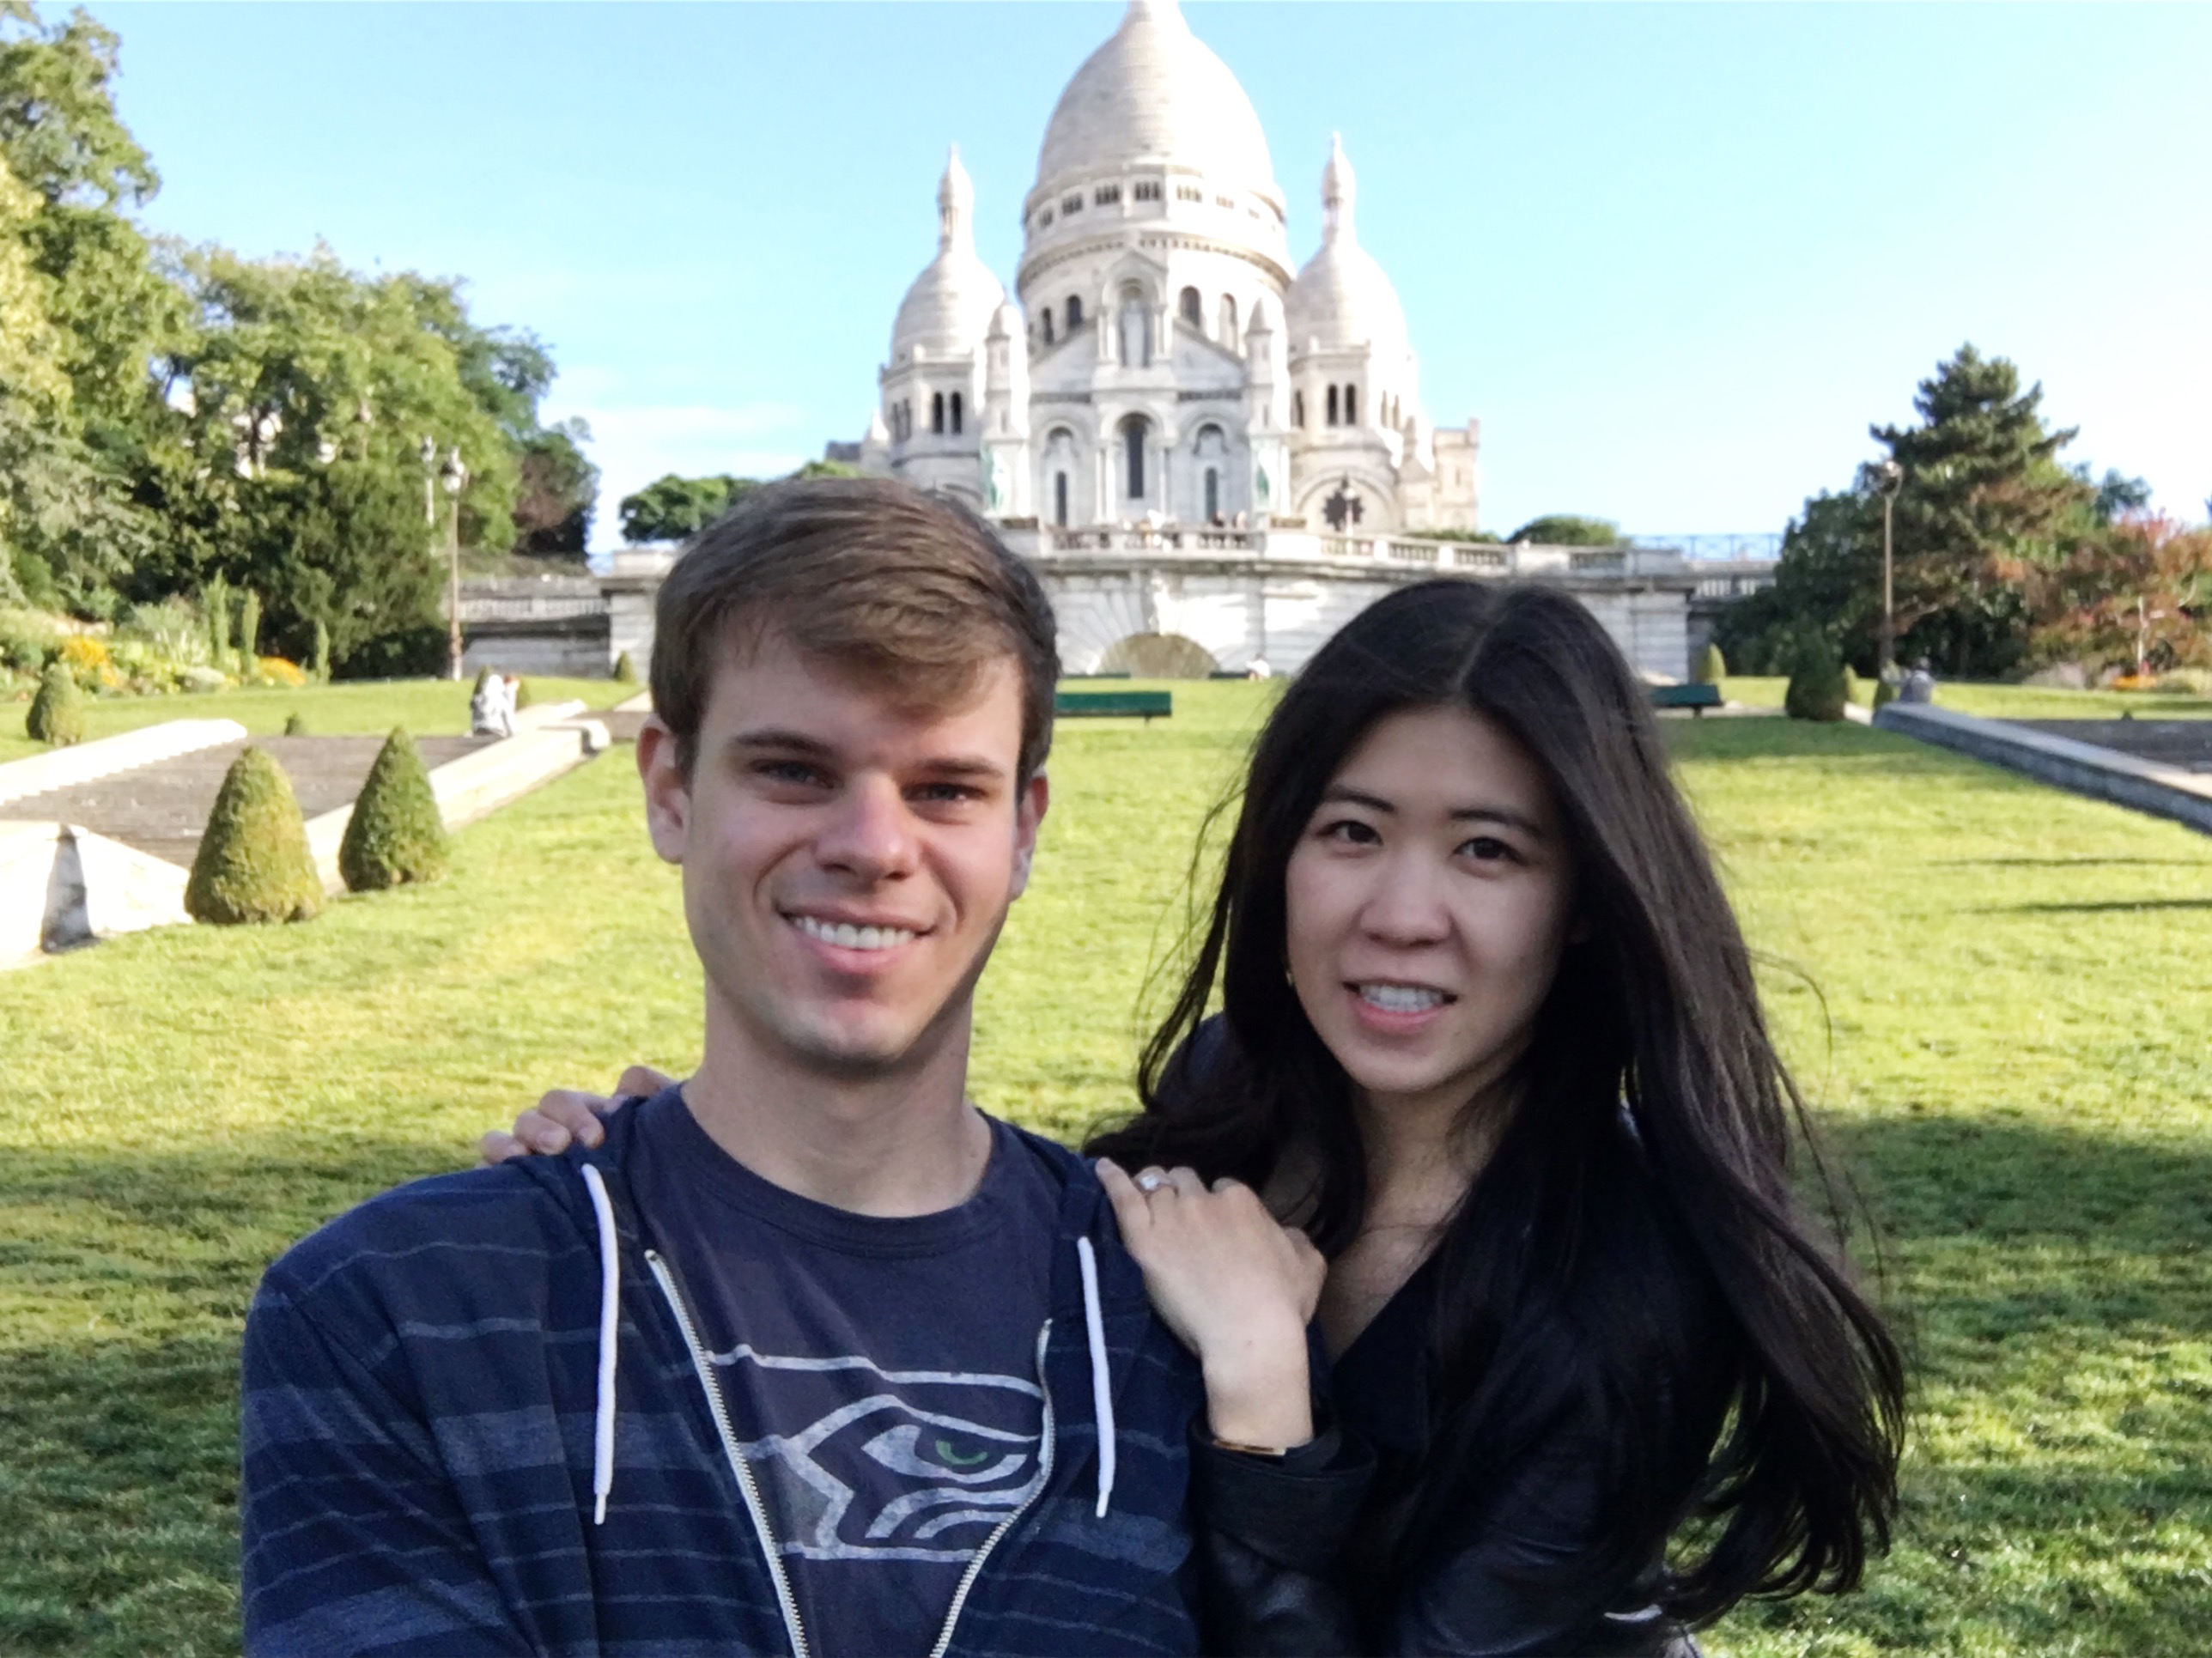 Selfie at Sacre Coeur in Paris